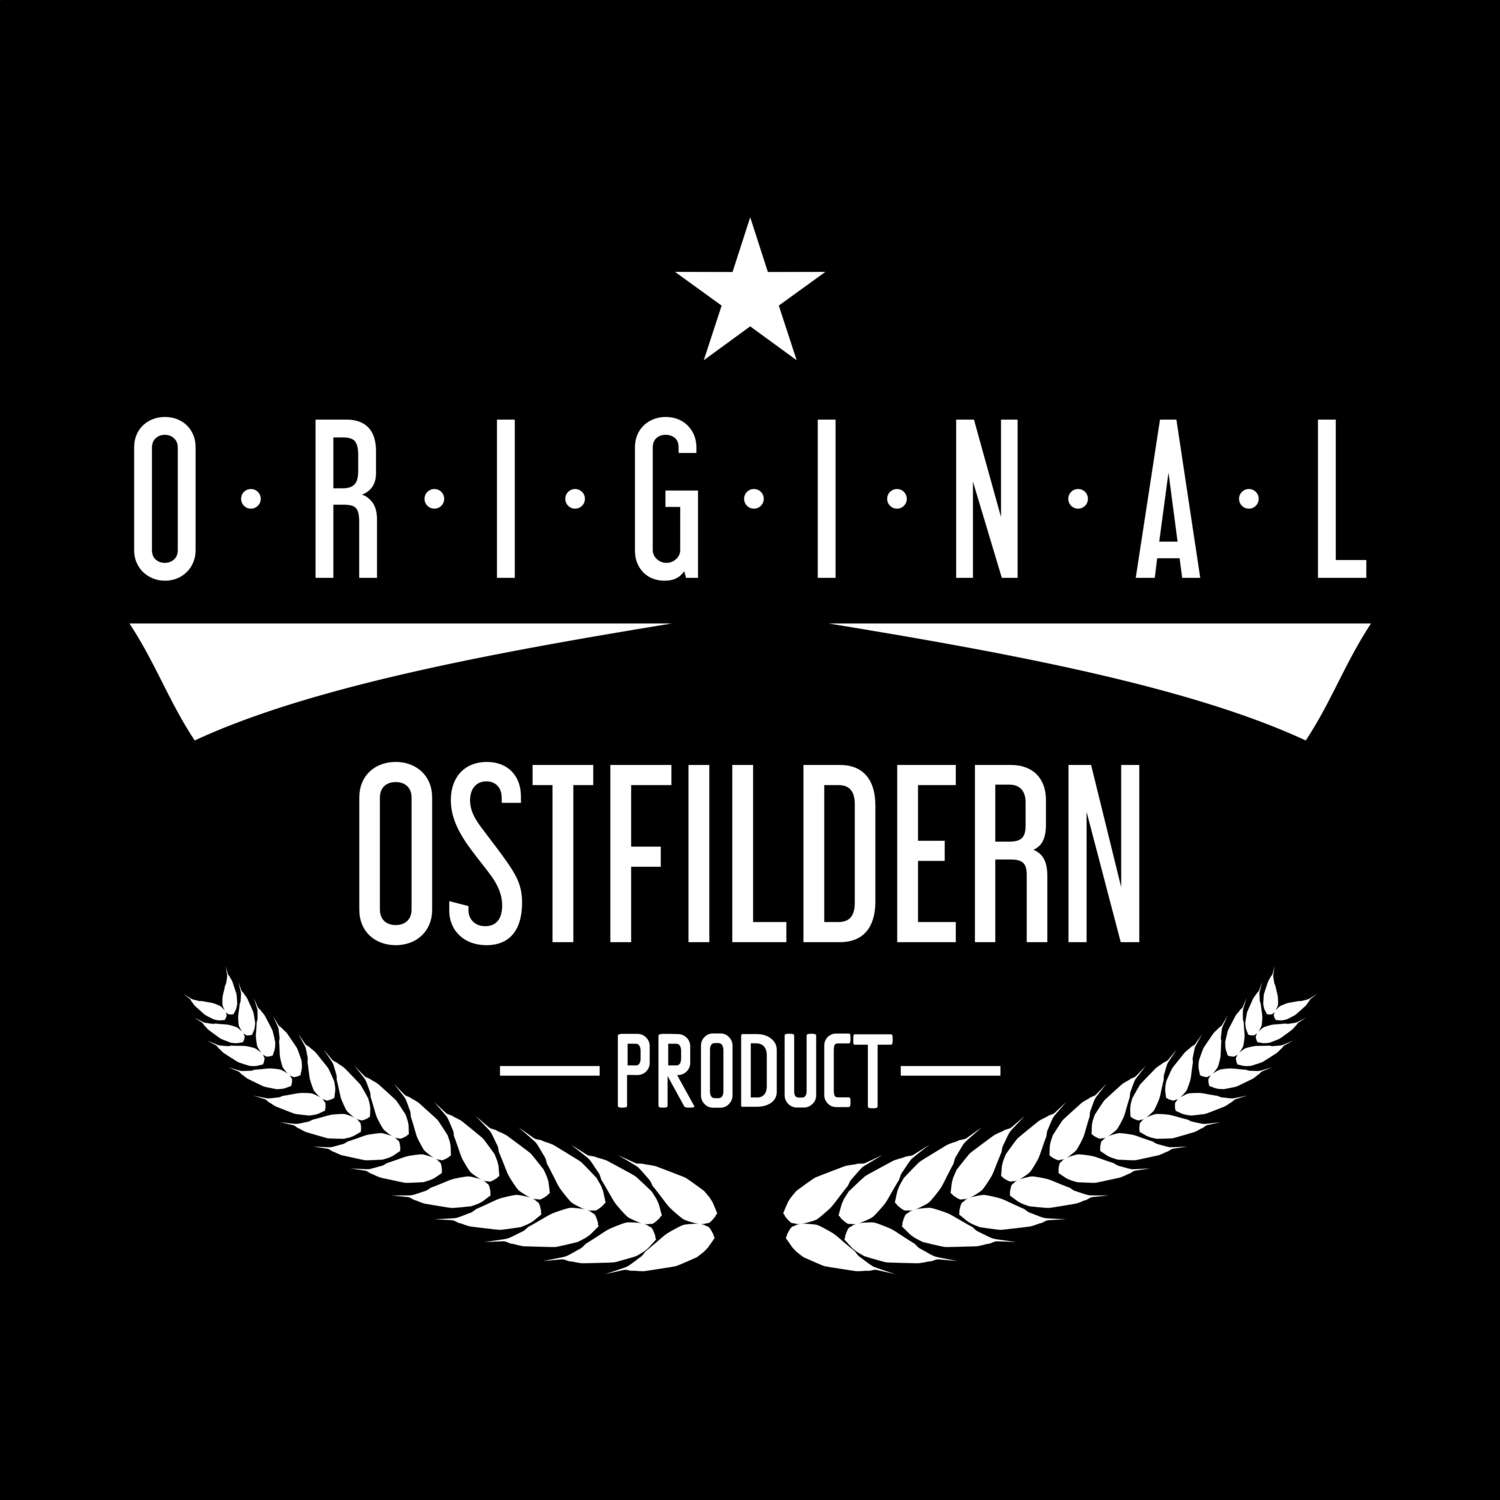 Ostfildern T-Shirt »Original Product«